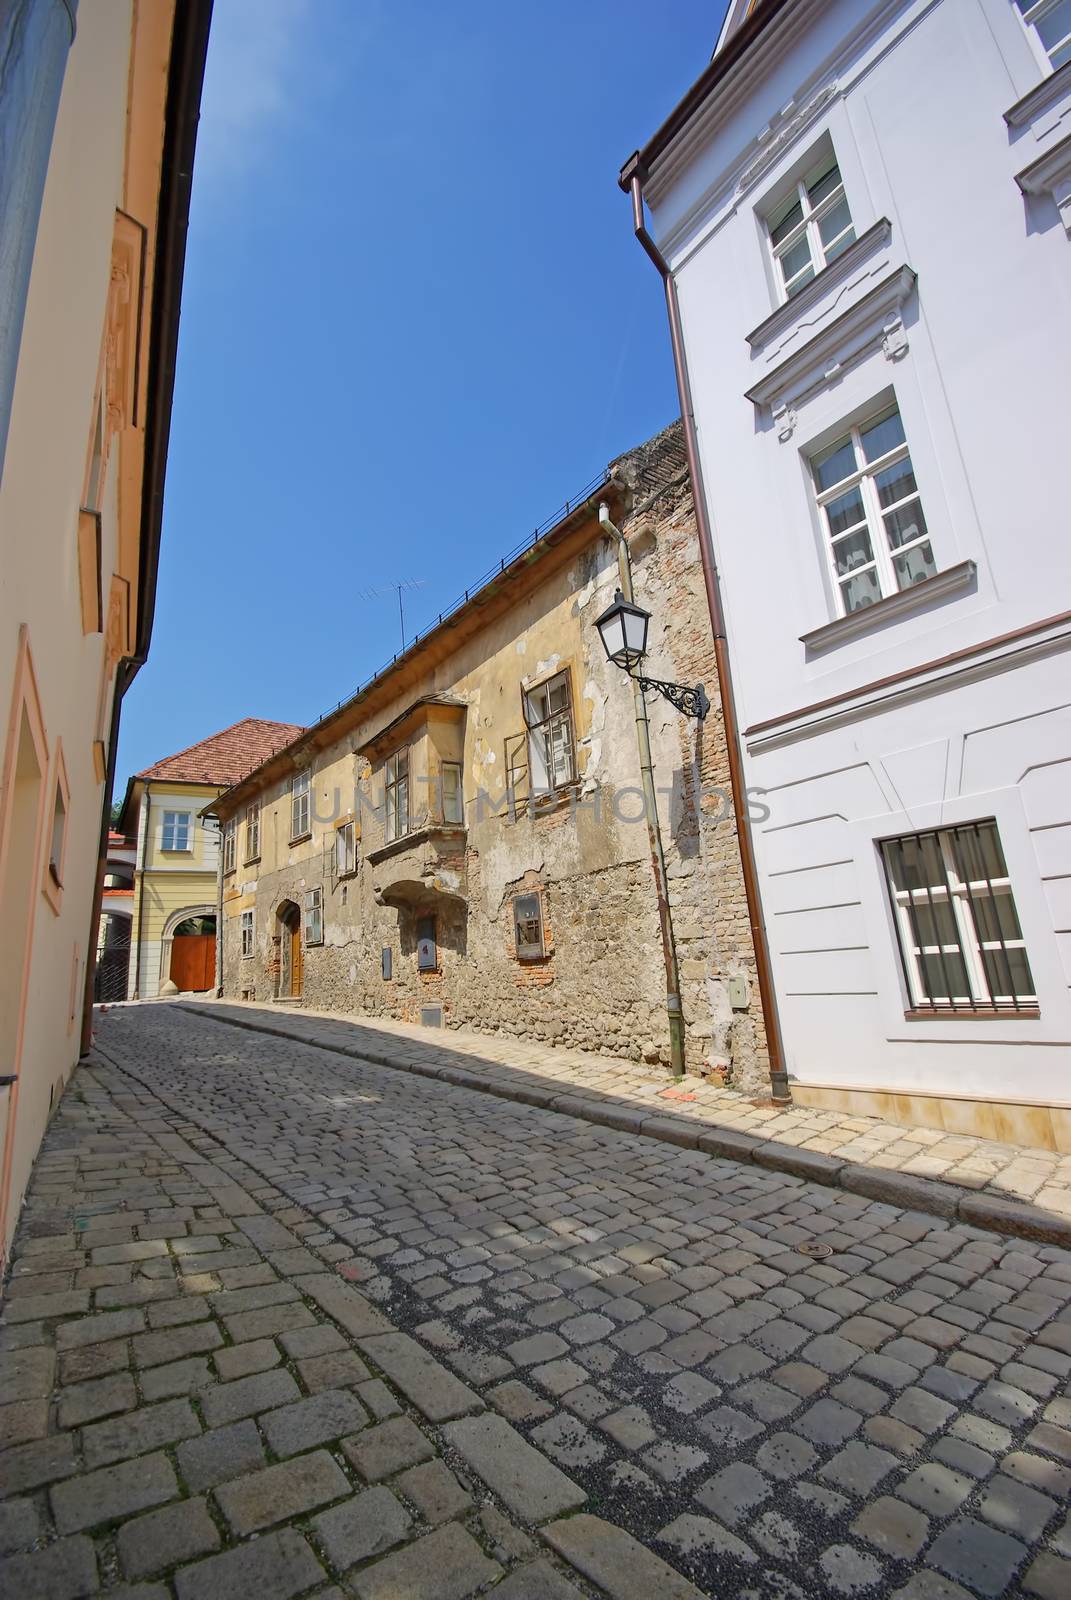 Pavement Bratislava street in medieval town, historic center